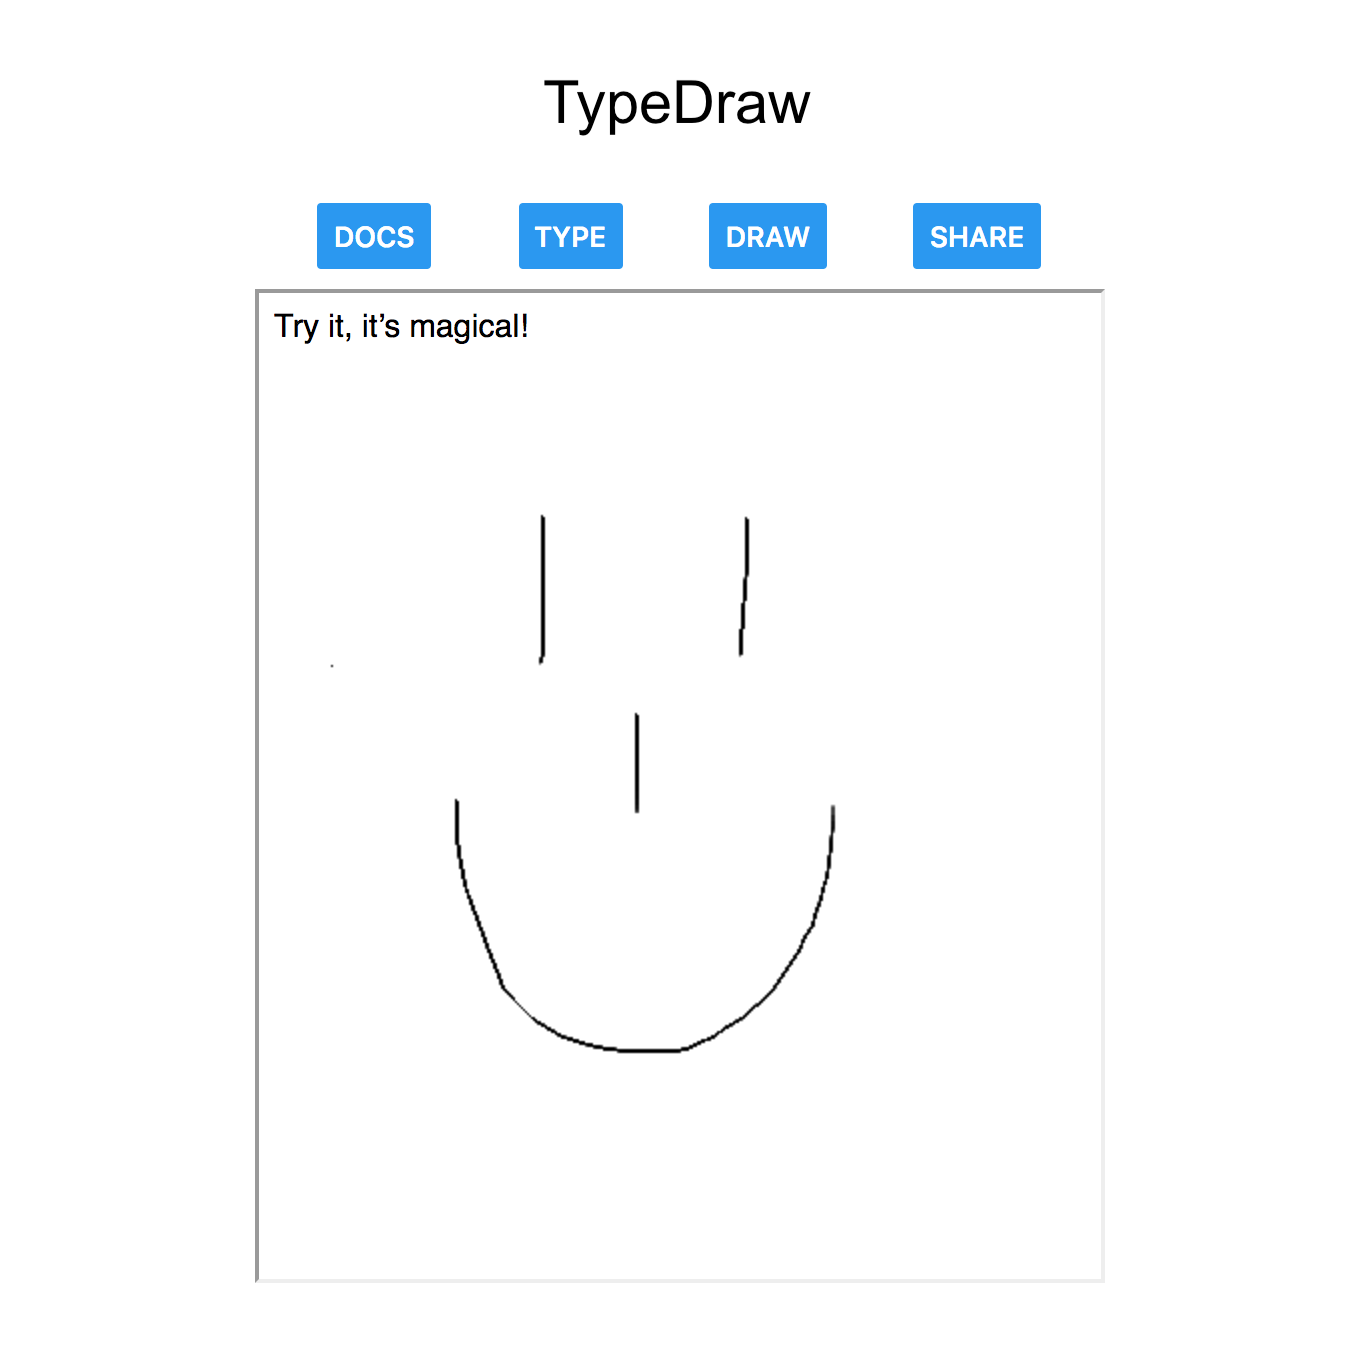 TypeDraw